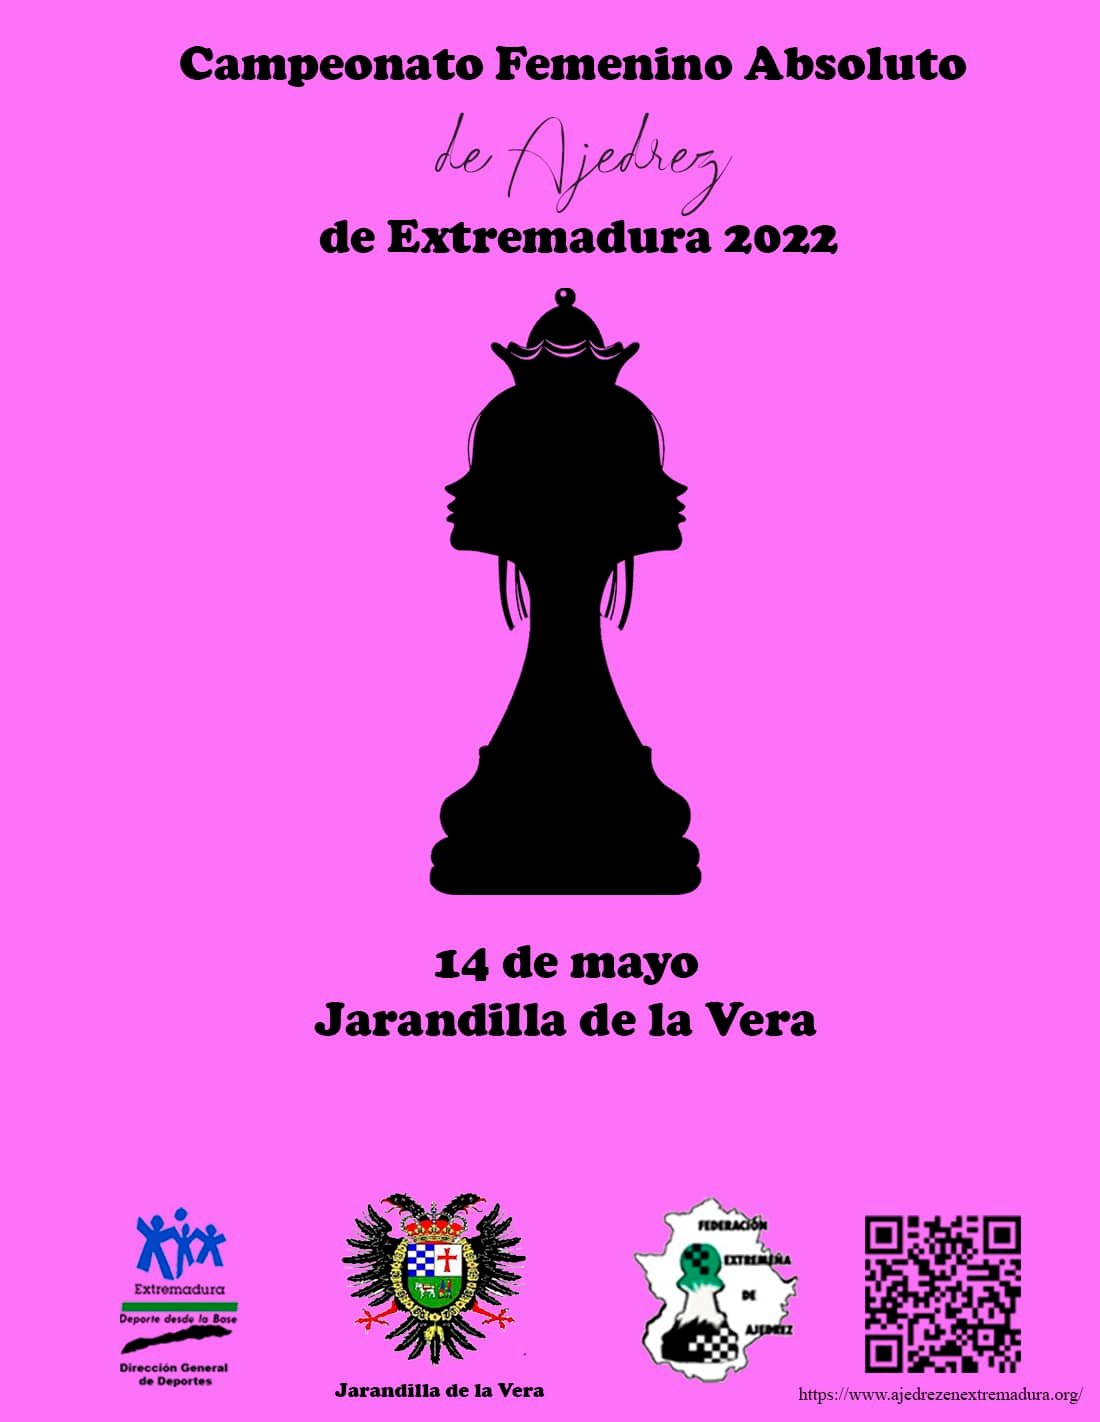 Campeonato Femenino Absoluto de Ajedrez de Extremadura (2022) - Jarandilla de la Vera (Cáceres)